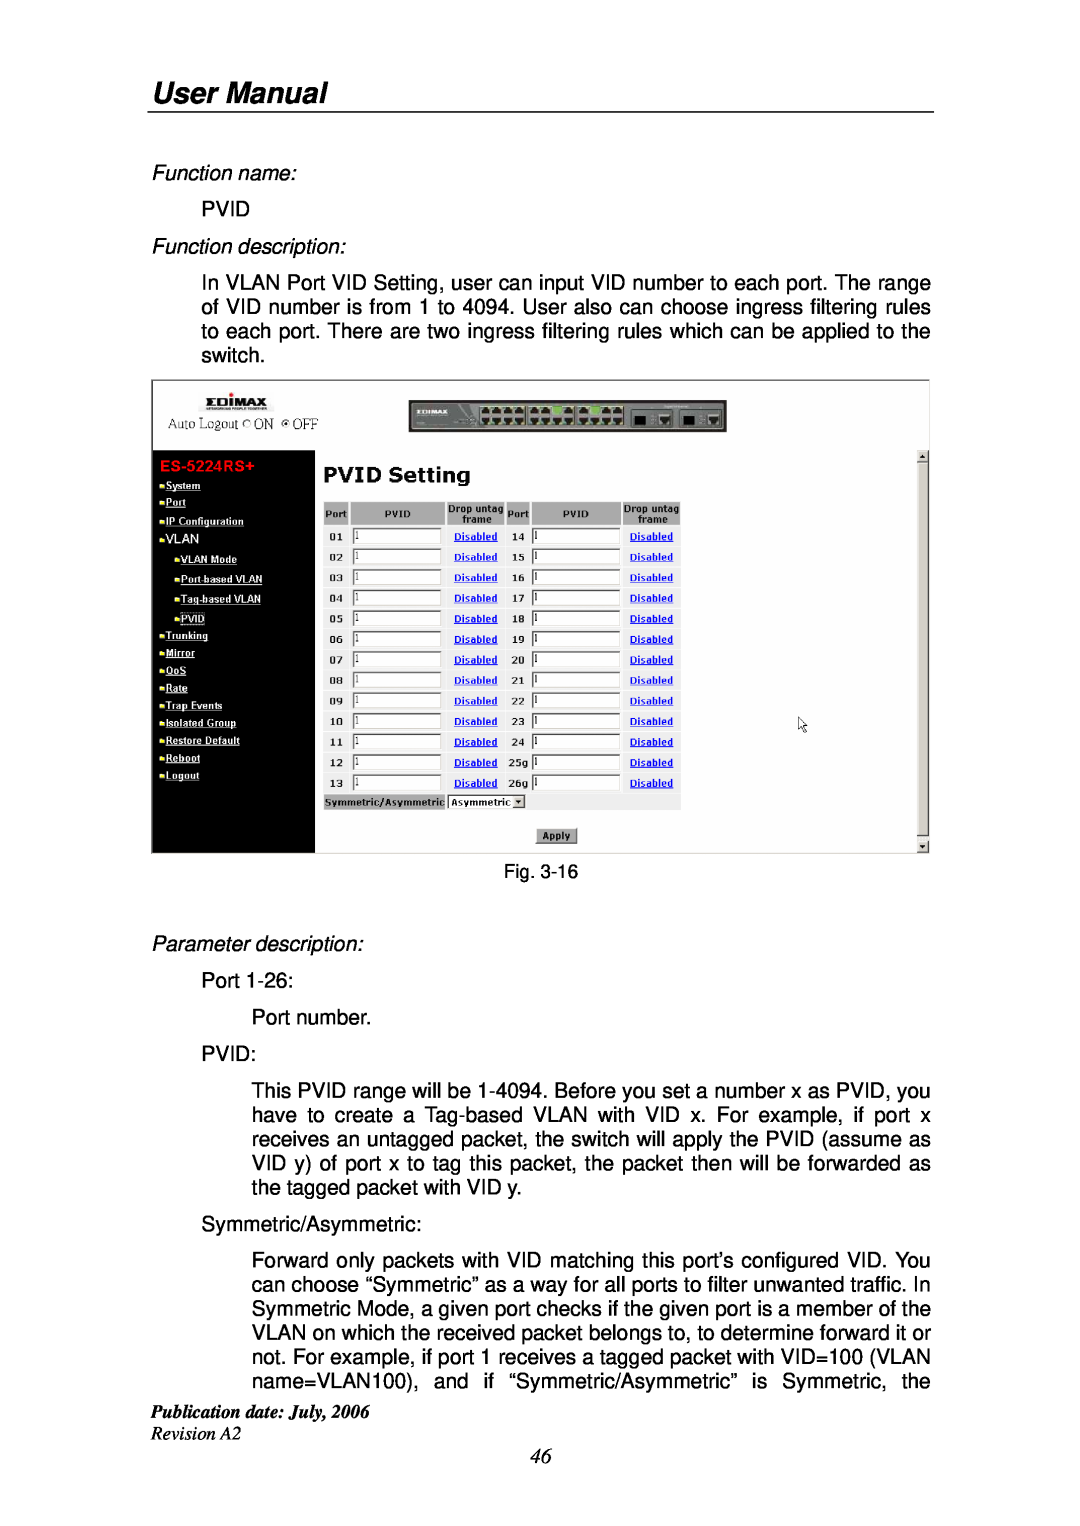 Edimax Technology ES-5224RS+ user manual User Manual, Function name, Pvid, Function description, Parameter description 